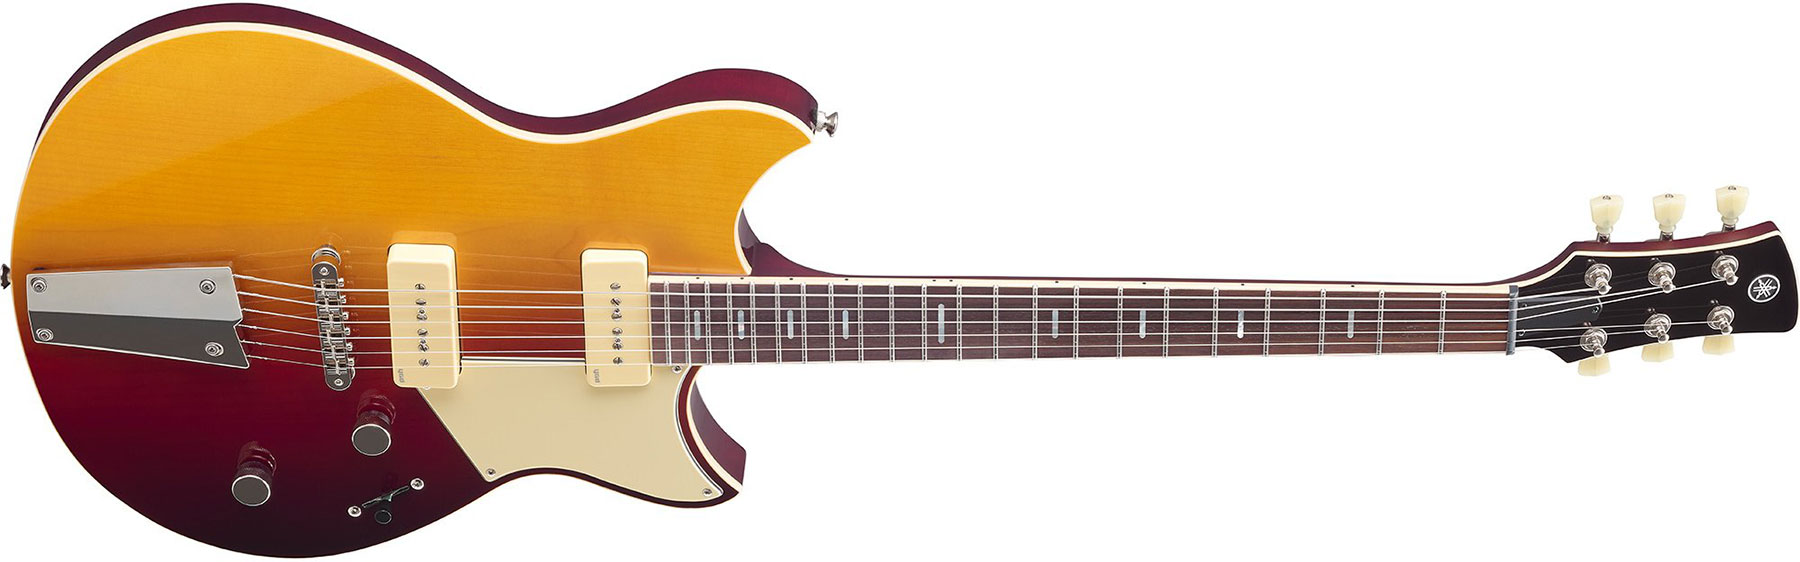 Yamaha Rss02t Revstar Standard 2p90 Ht Rw - Sunset Sunburst - Guitarra eléctrica de doble corte. - Variation 1